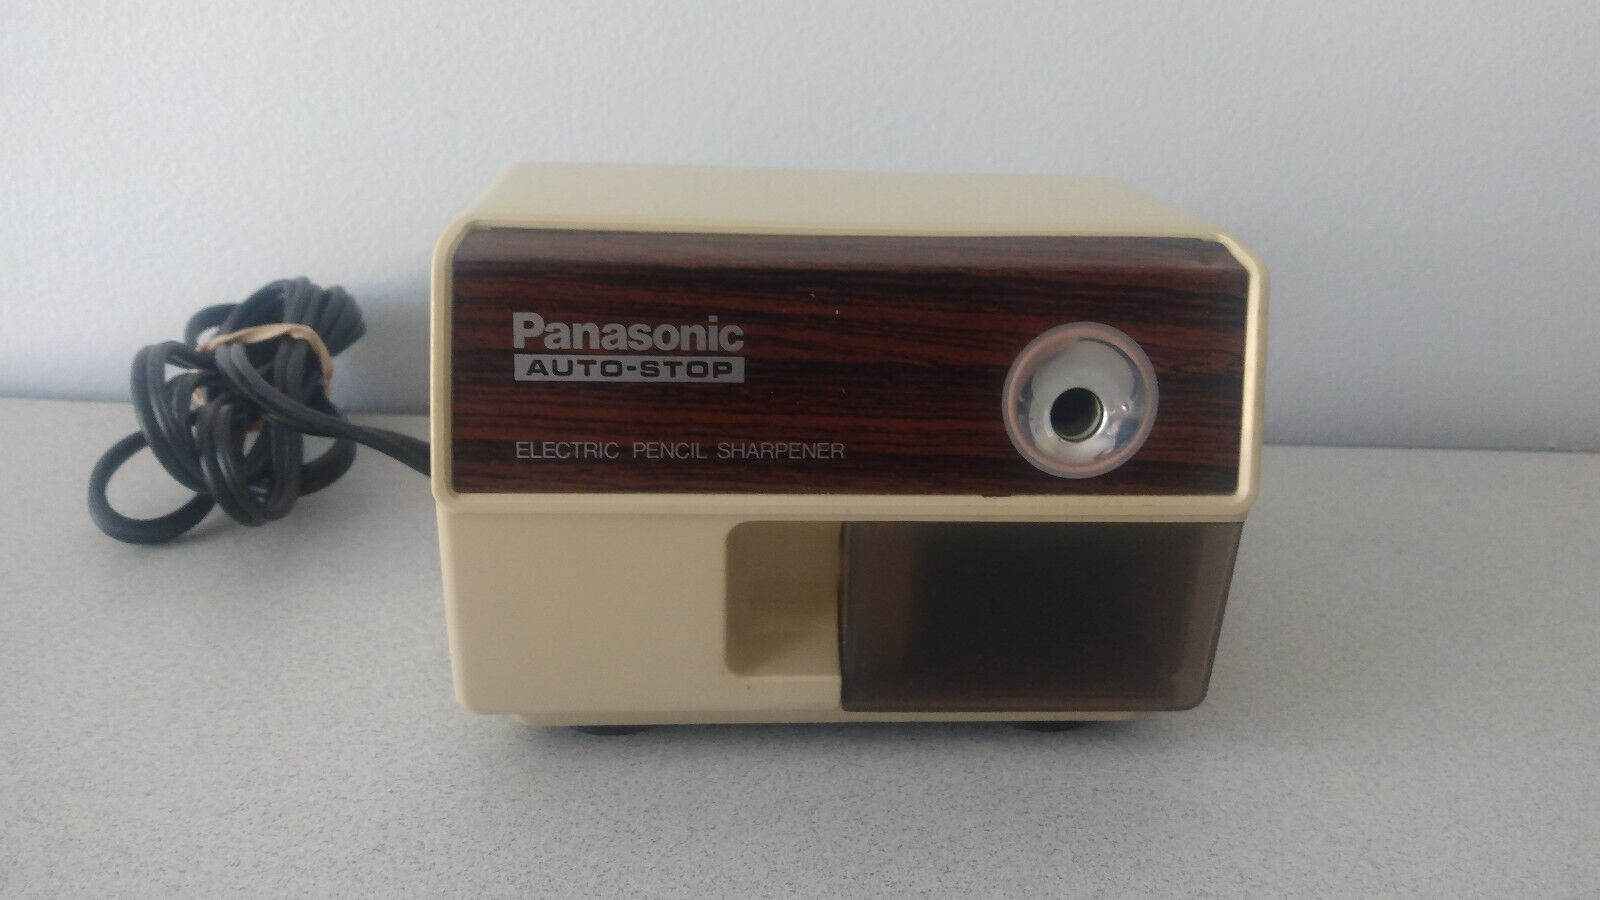 Panasonic Electric Pencil Sharpener Auto Stop KP-110 VTG